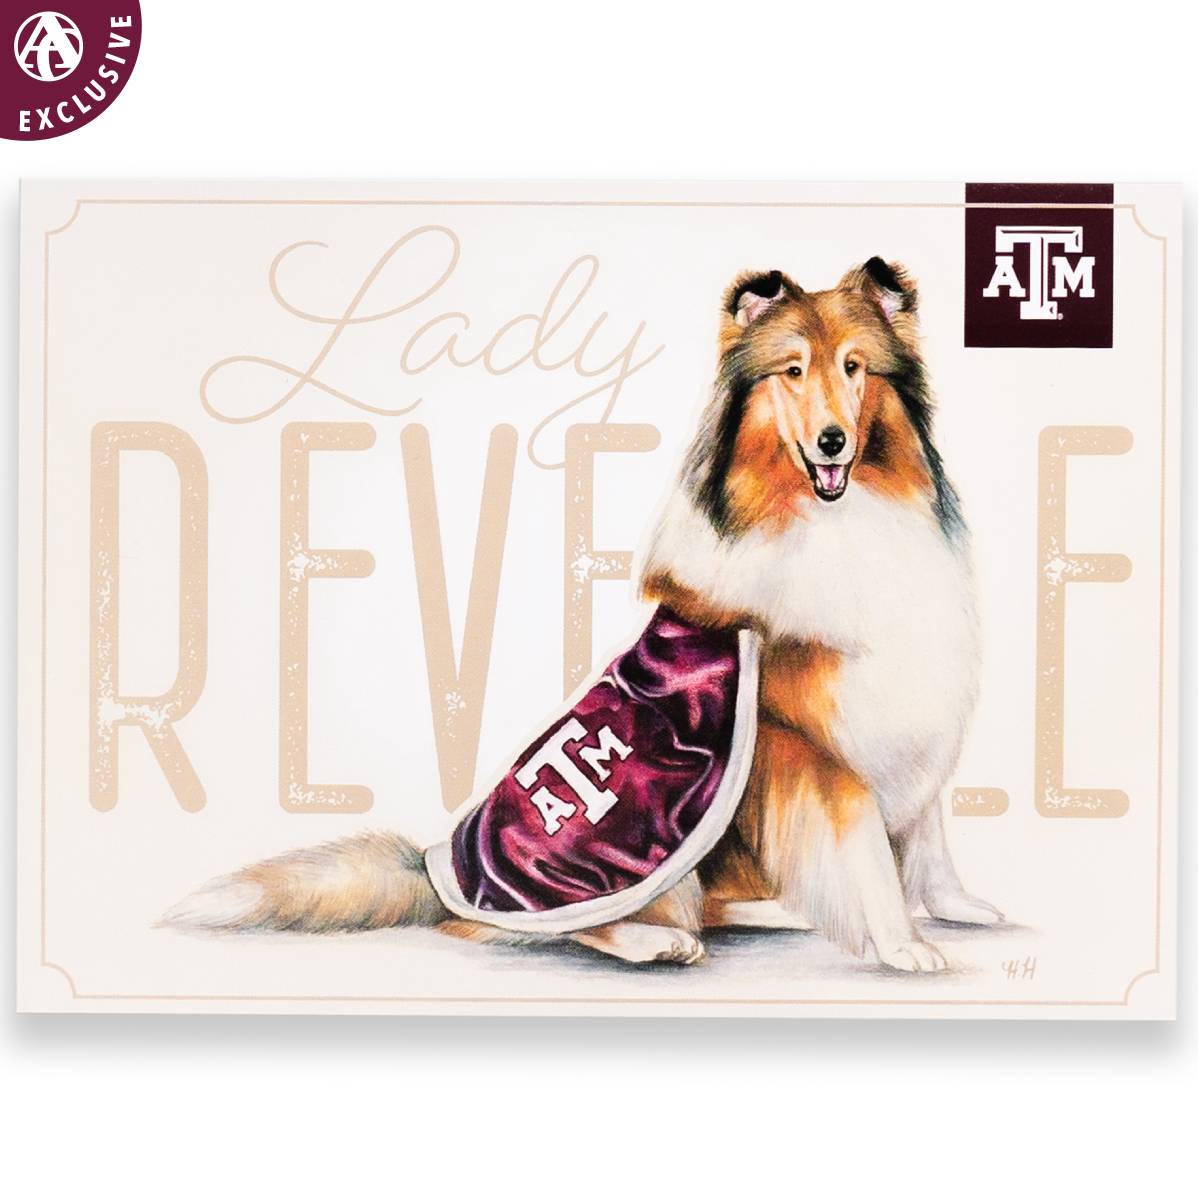 Texas A&M Lady Reveille Postcard